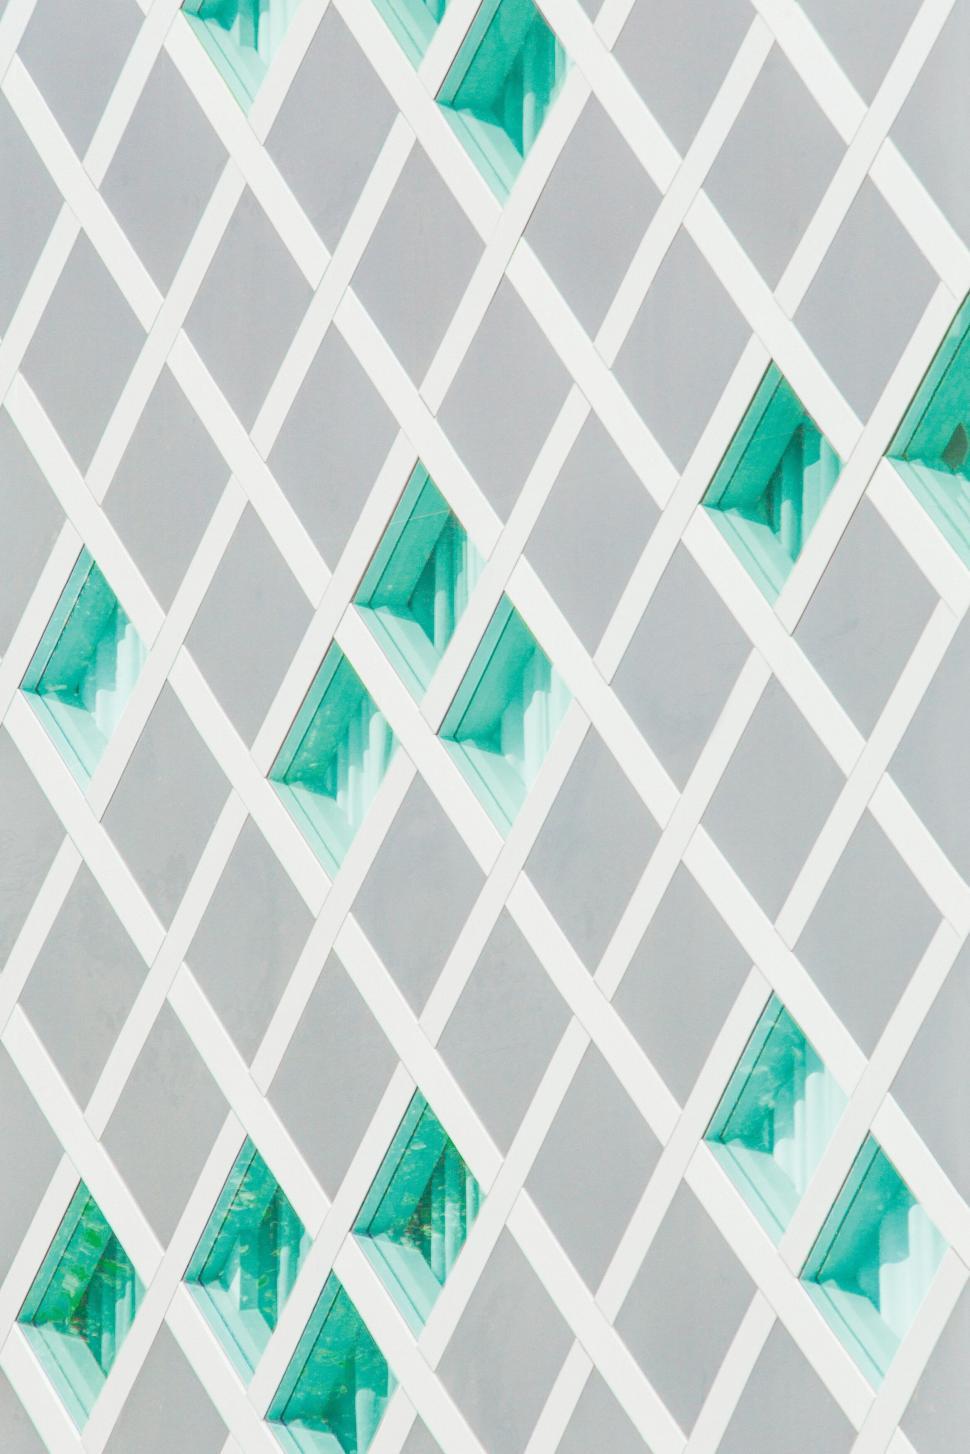 Free Image of Geometric pattern of turquoise windows 